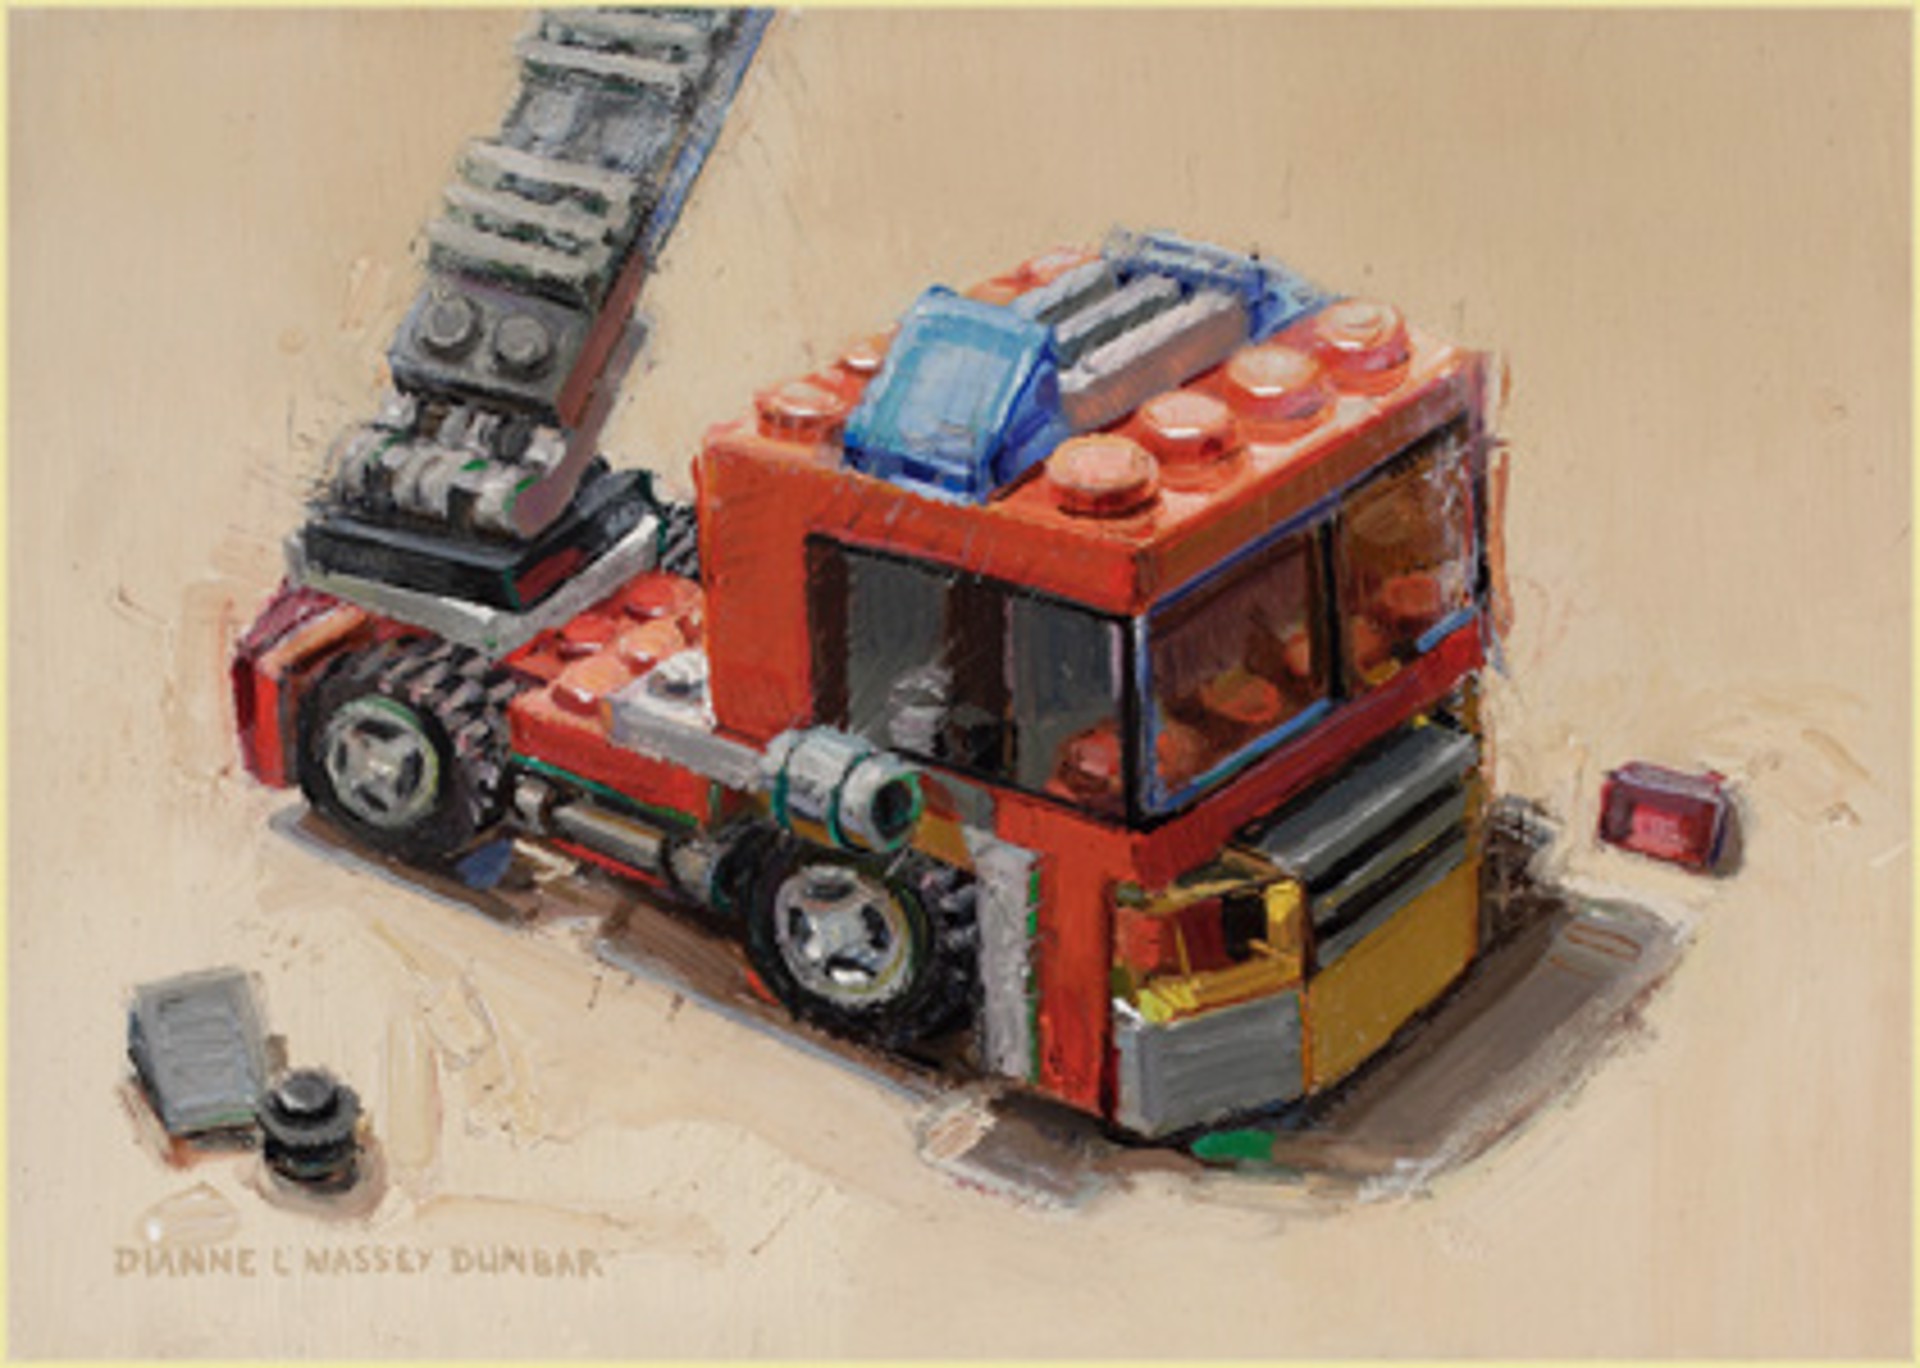 Fire Engine by Dianne L Massey Dunbar